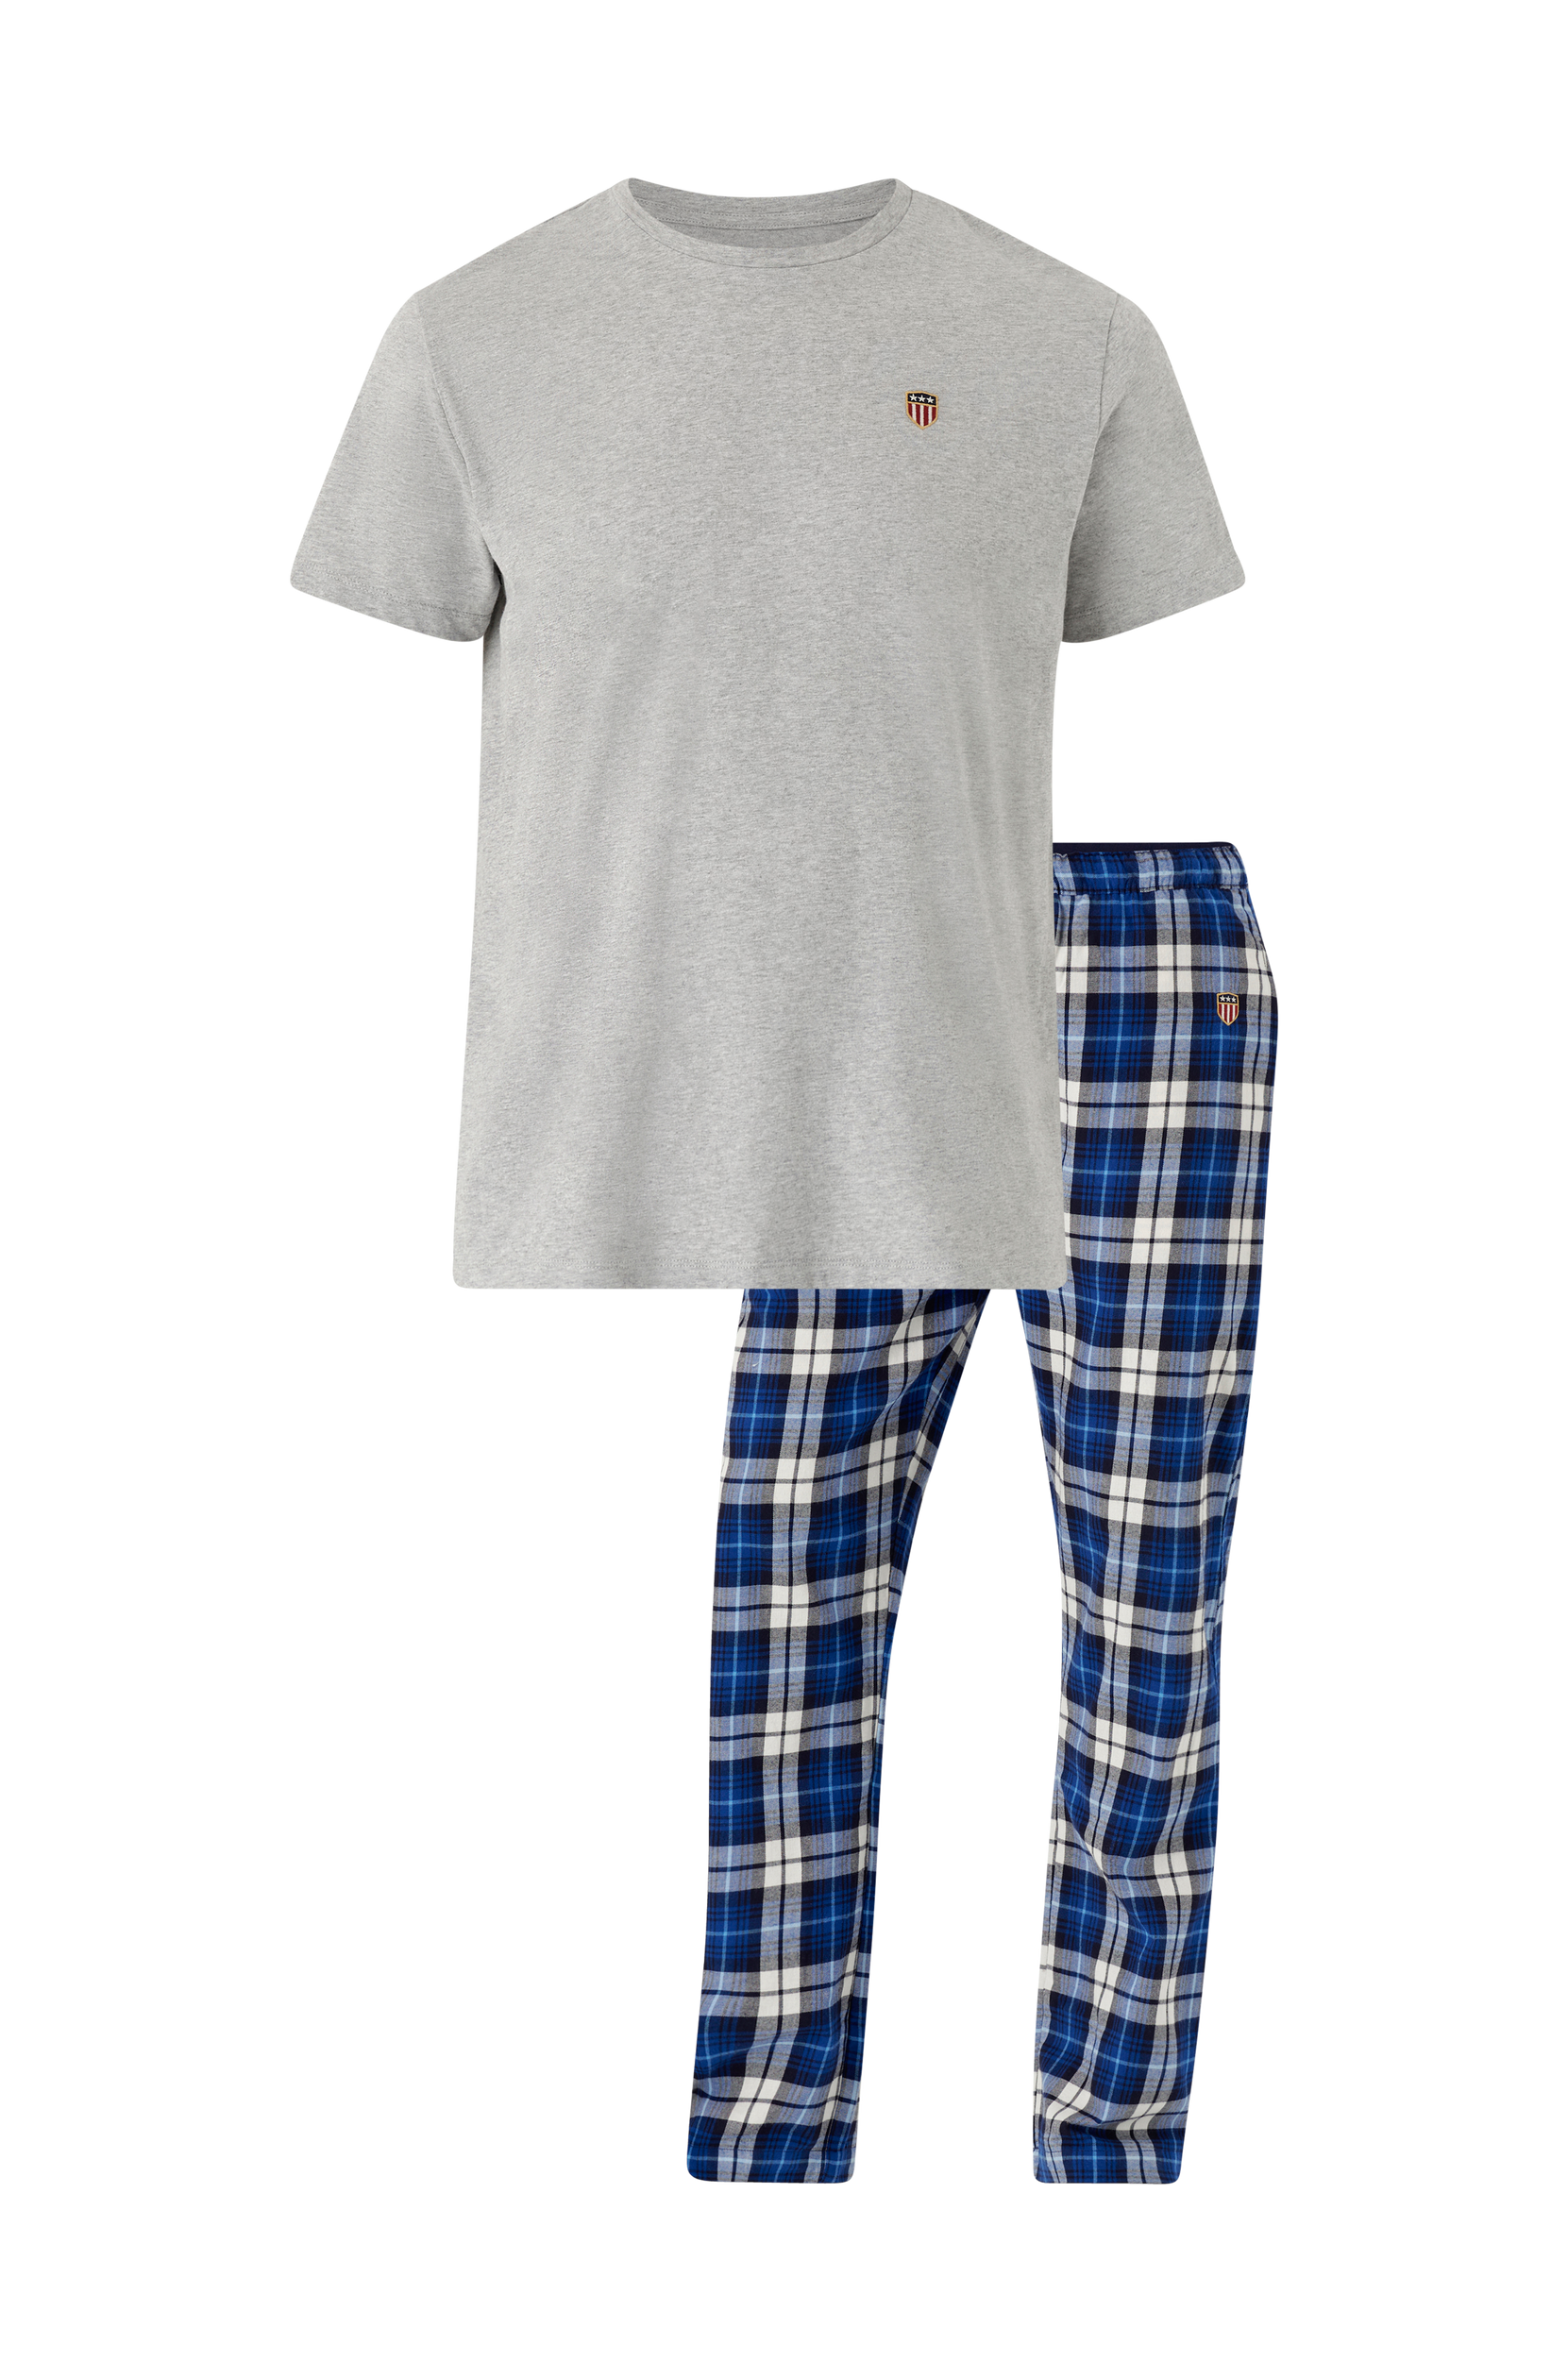 Gant - Pyjamas Flannel Pajama Set Pants and T GB - Blå - L